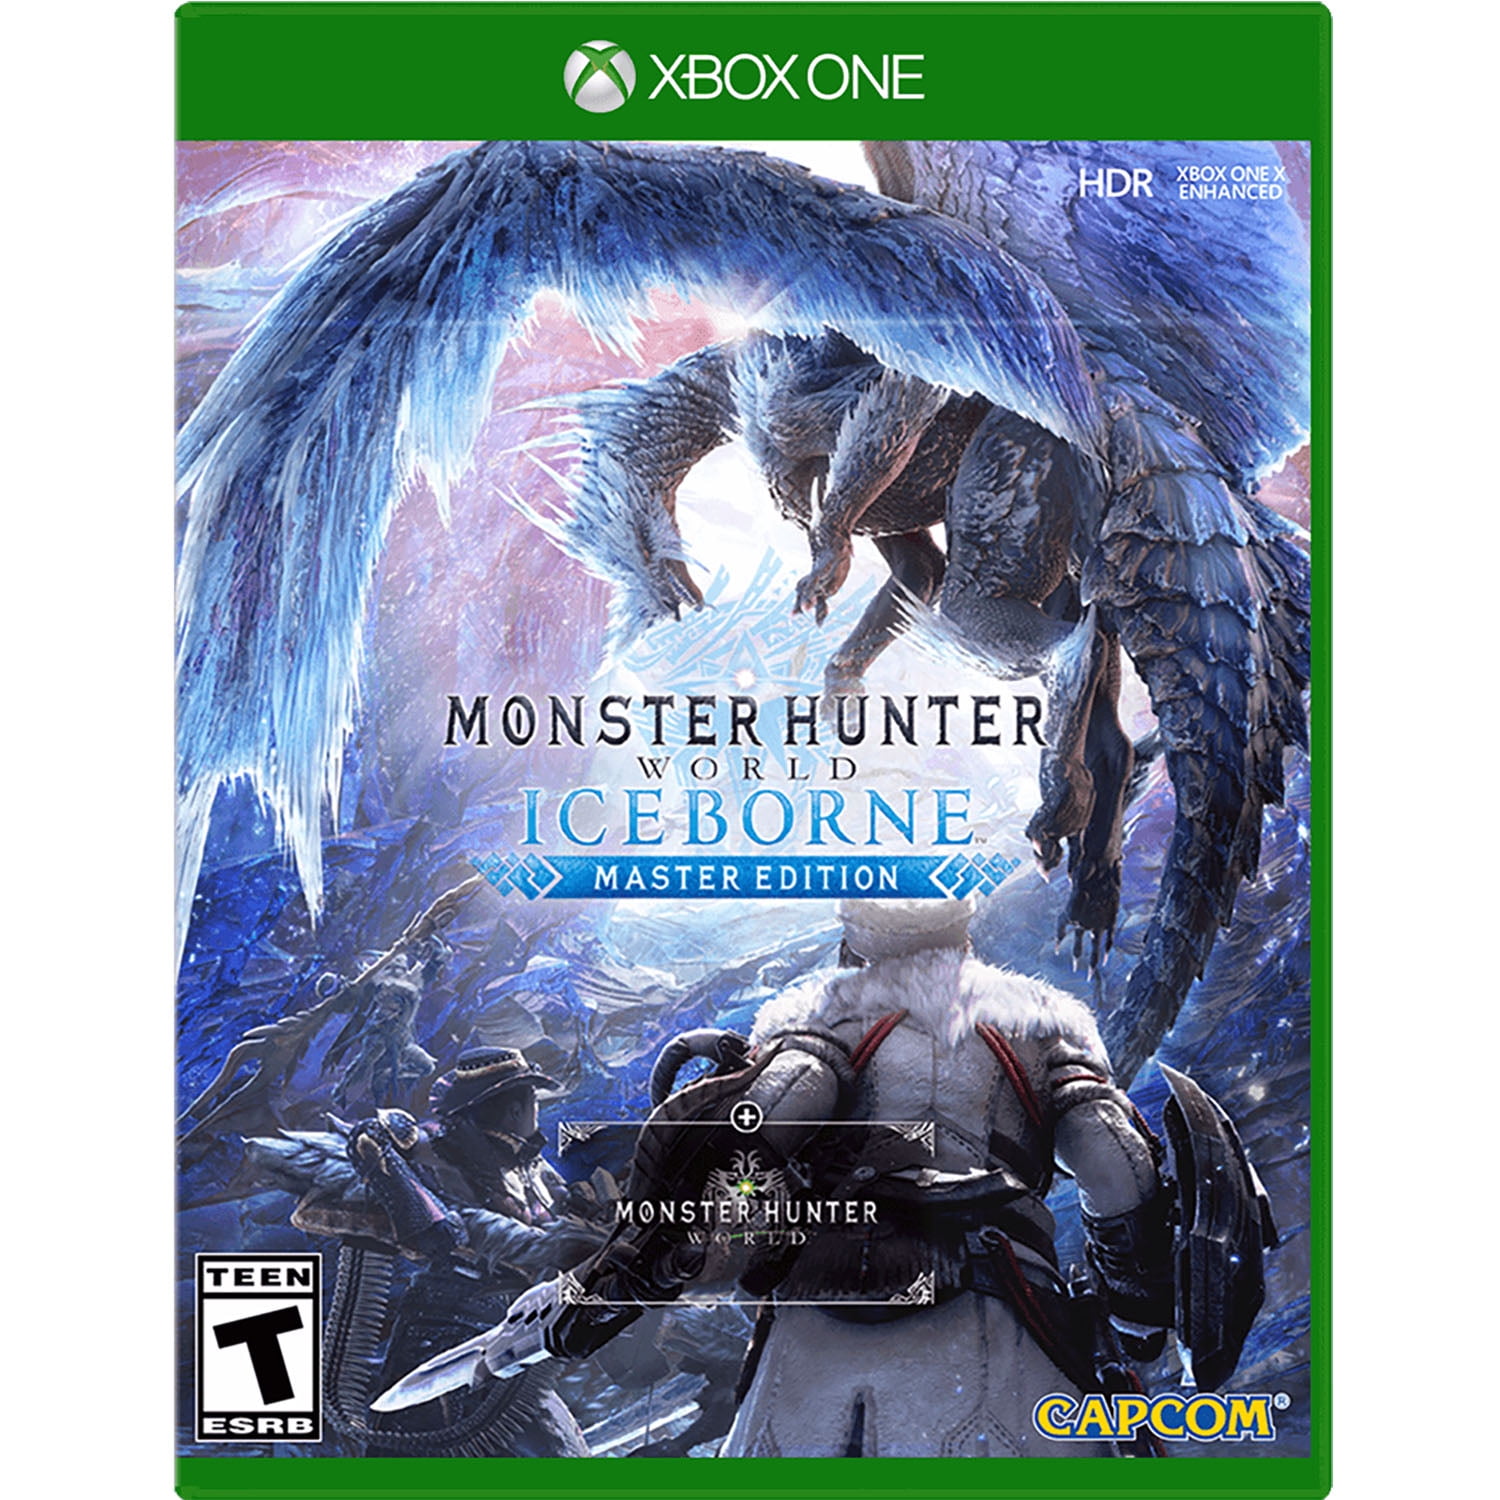 Monster Hunter World Iceborne Master Edition Xbox One Capcom